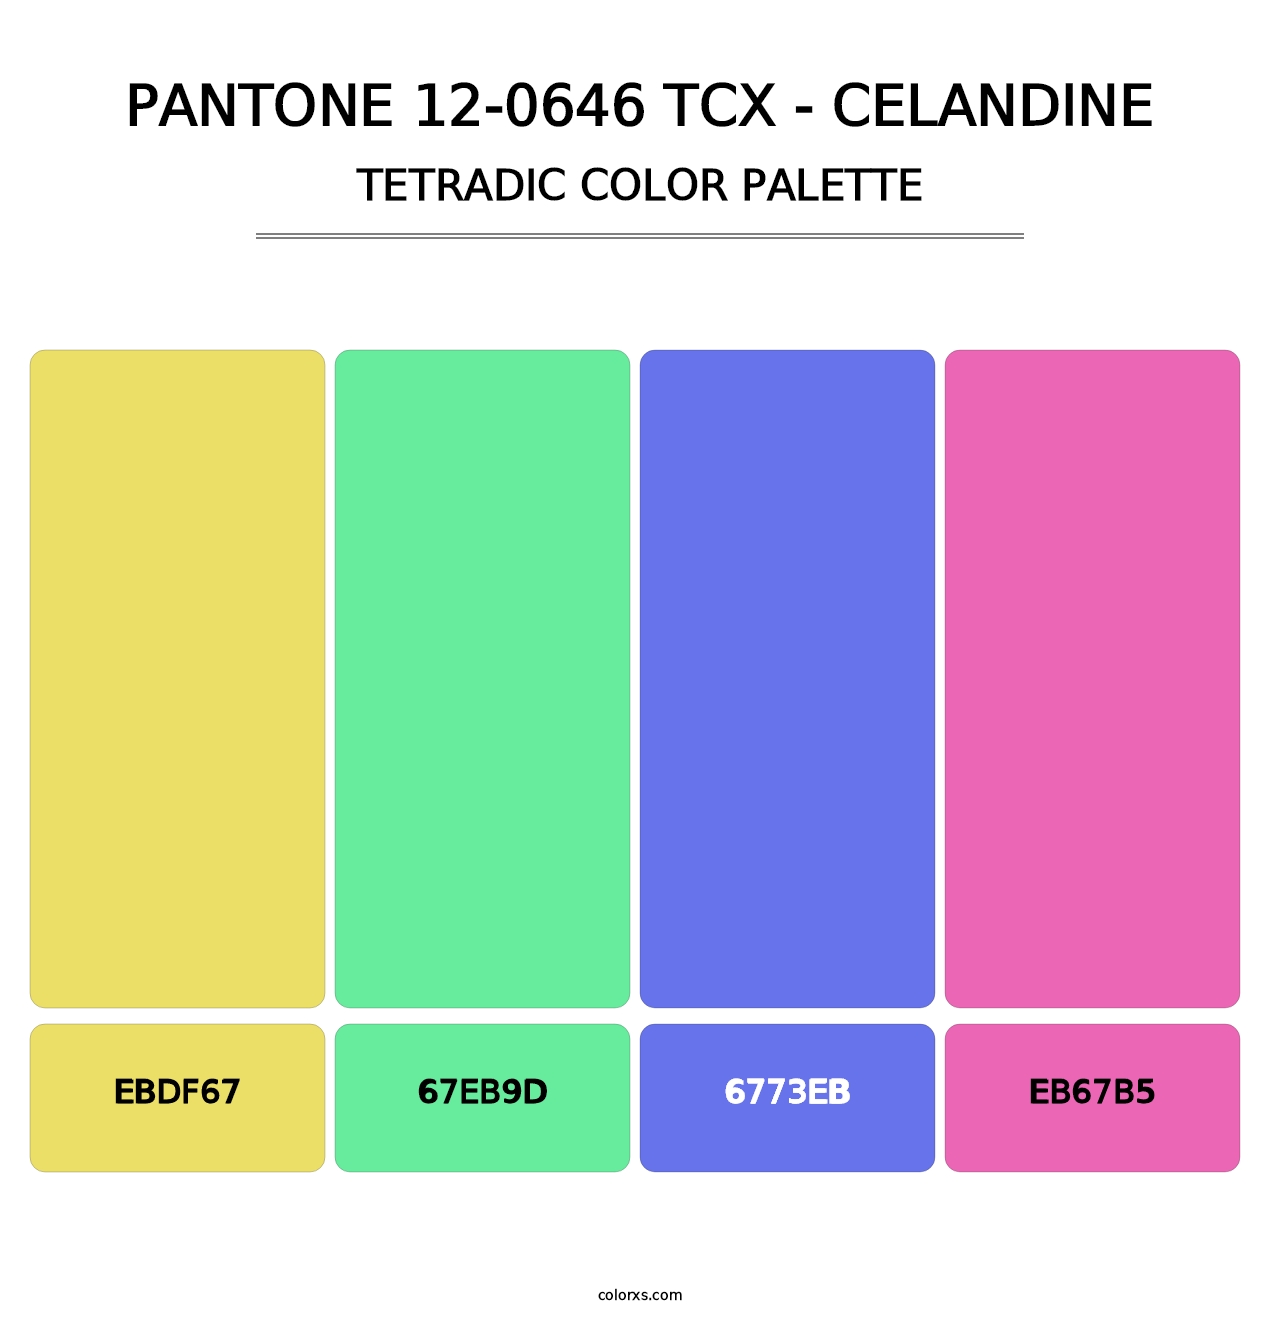 PANTONE 12-0646 TCX - Celandine - Tetradic Color Palette